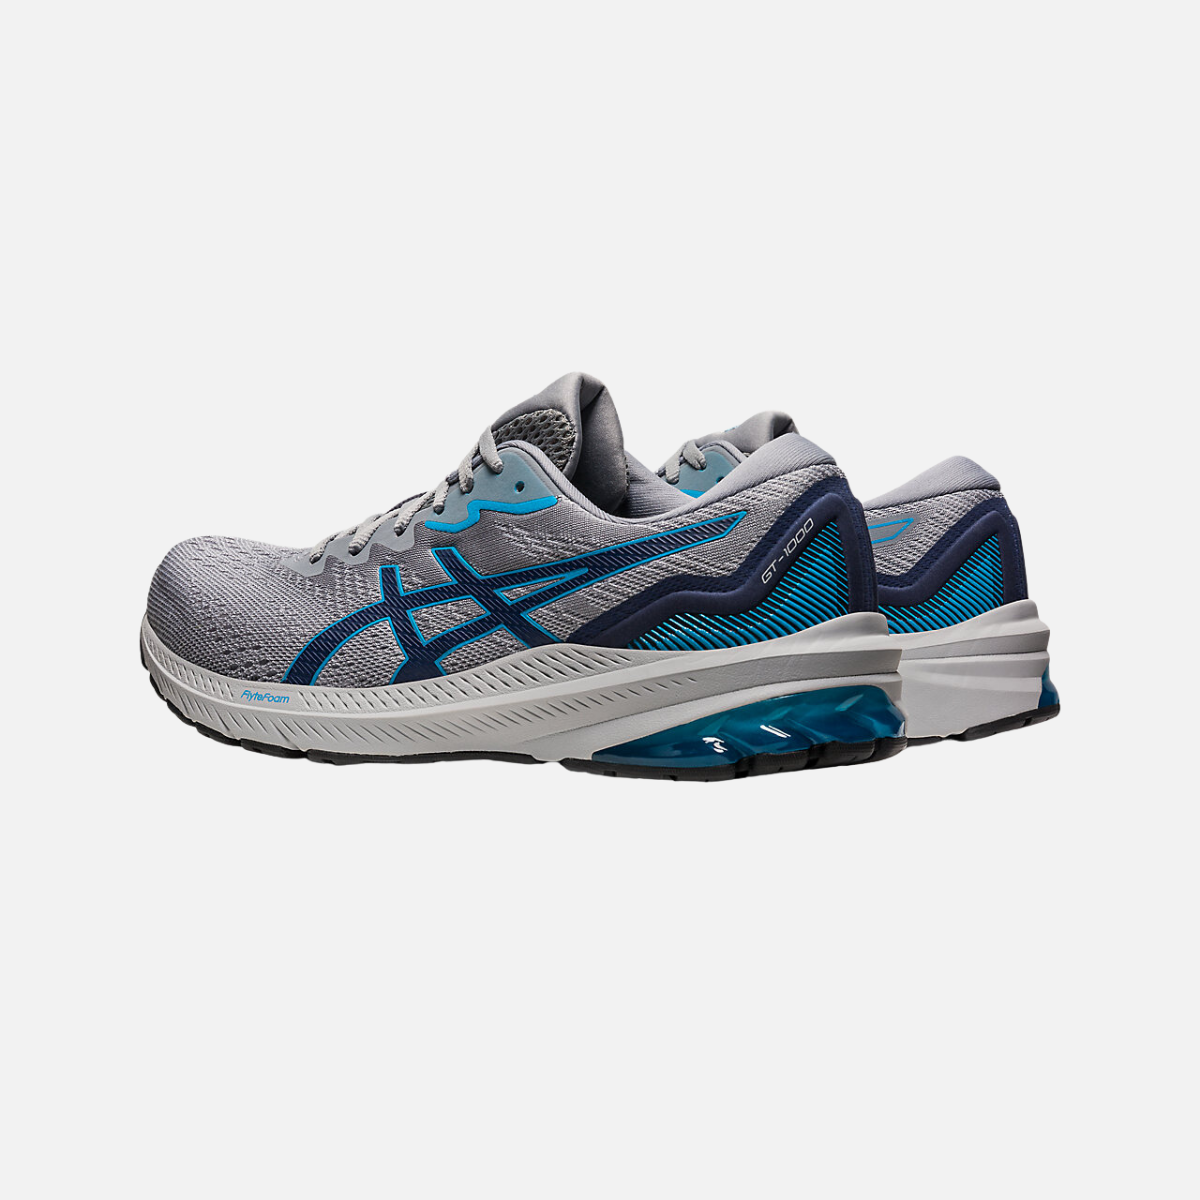 Asics GT-1000 11 Men's Running Shoes -Piedmont Grey/Indigo Blue